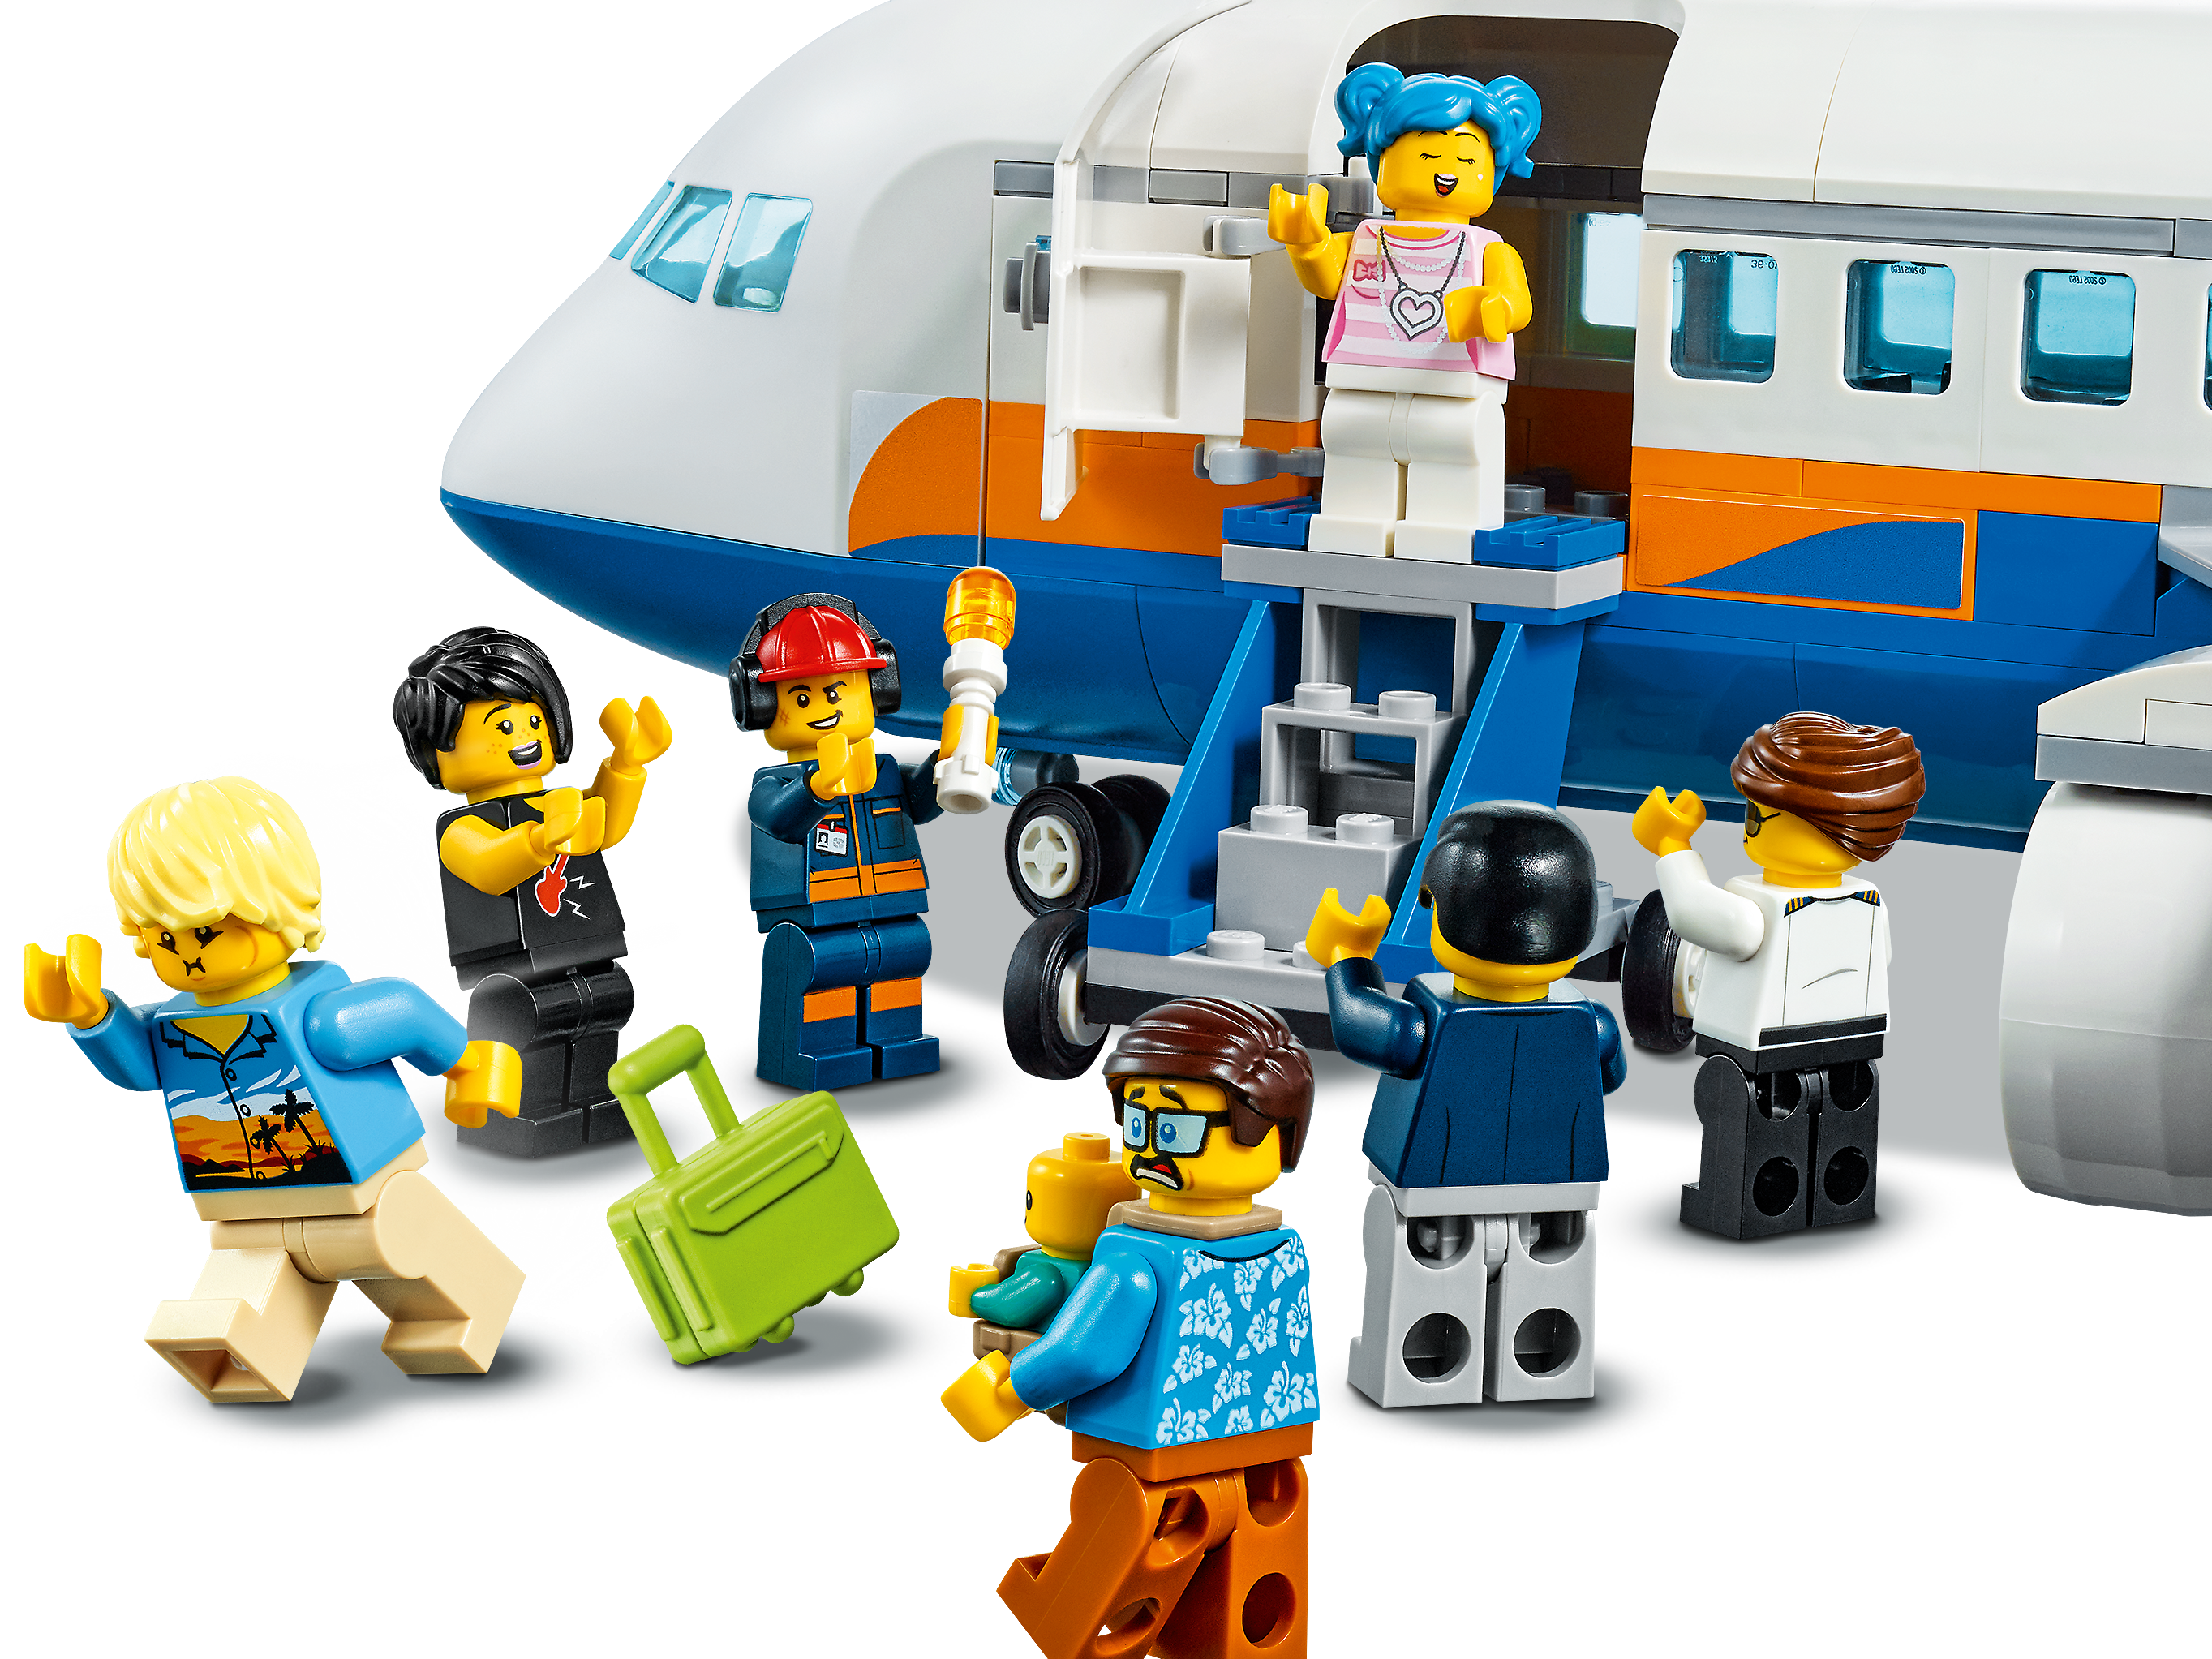 dynasti Tilbud Repræsentere Passenger Airplane 60262 | City | Buy online at the Official LEGO® Shop US